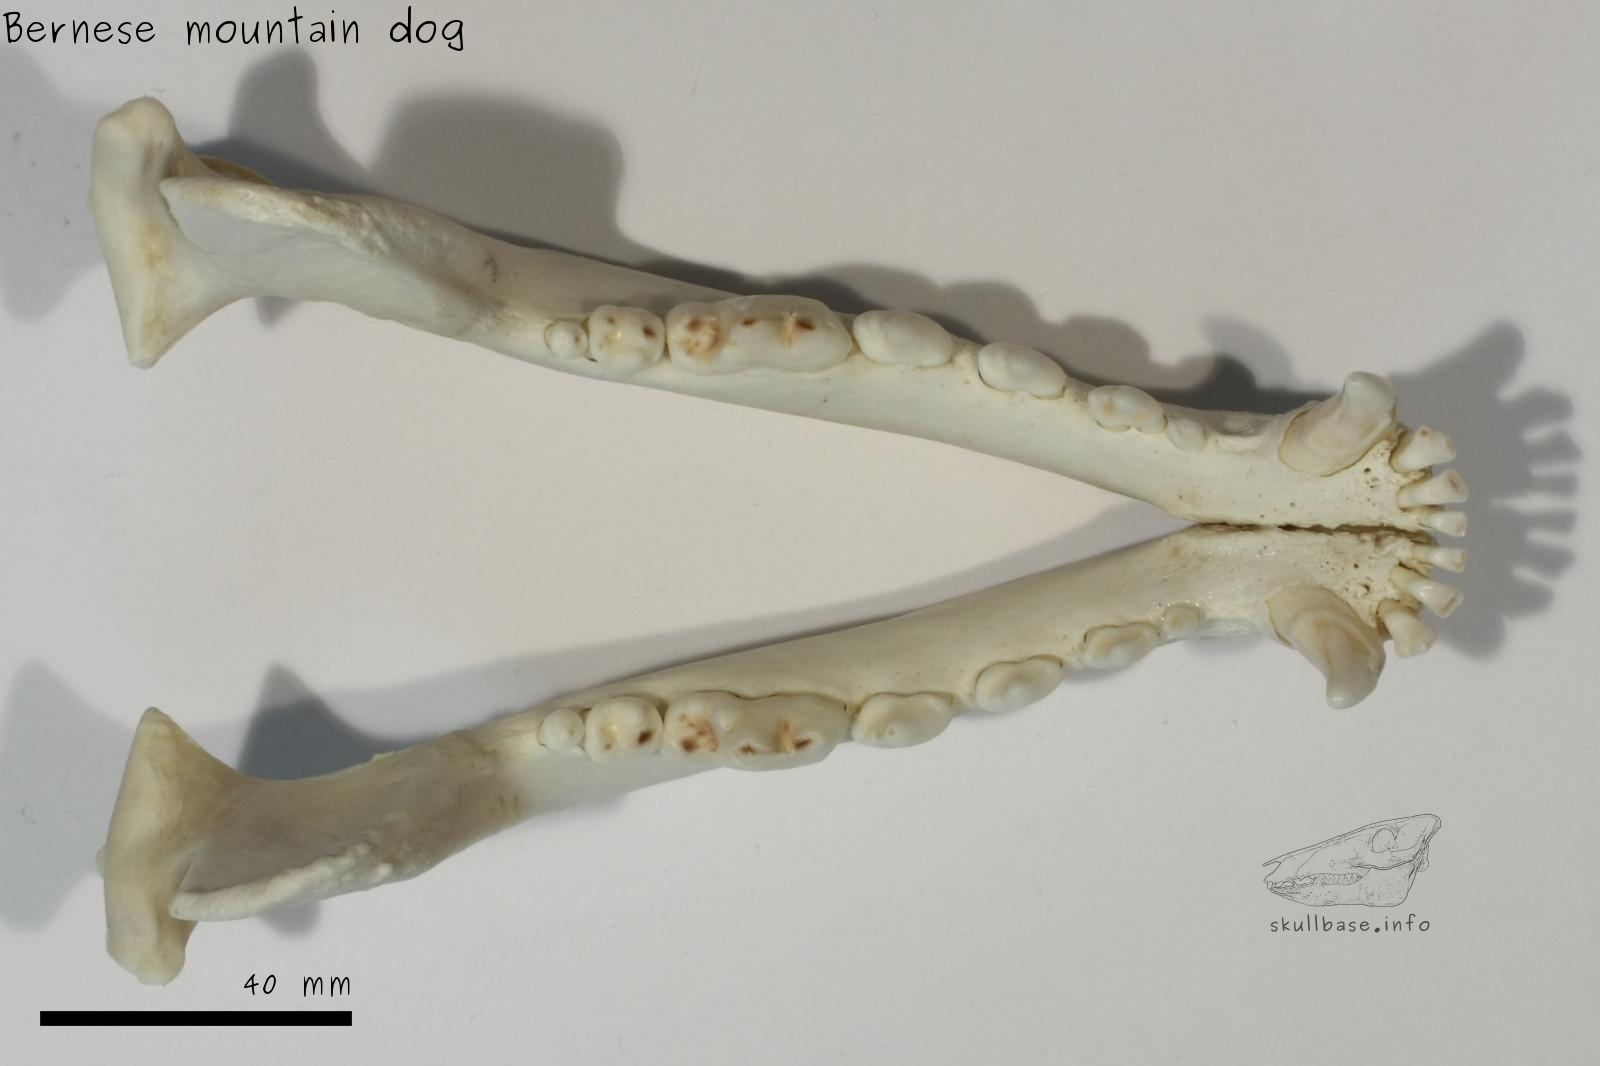 Bernese mountain dog (Canis lupus familiaris) jaw